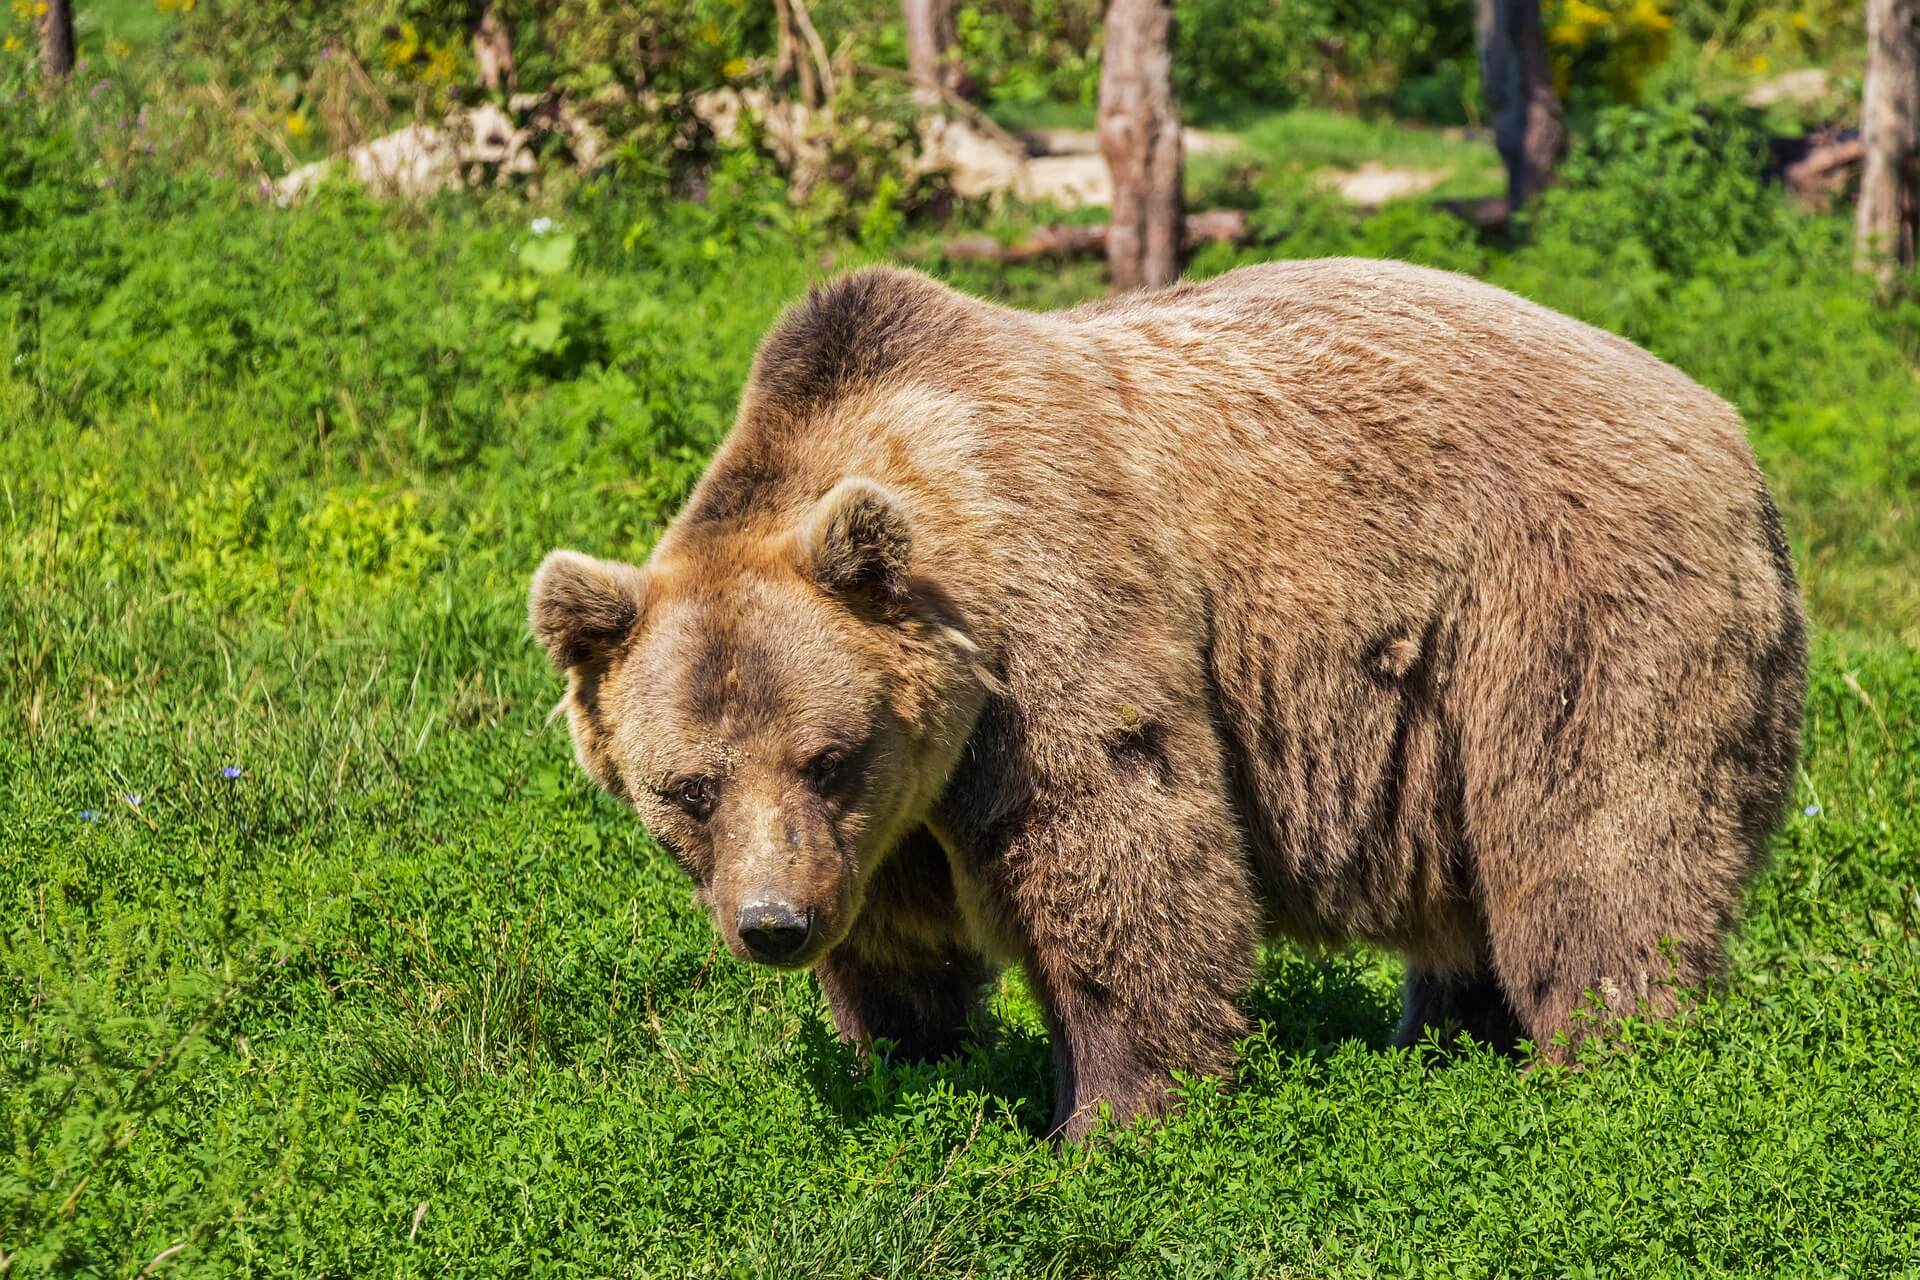 https://pixabay.com/en/bear-brown-bear-animal-mammal-422682/